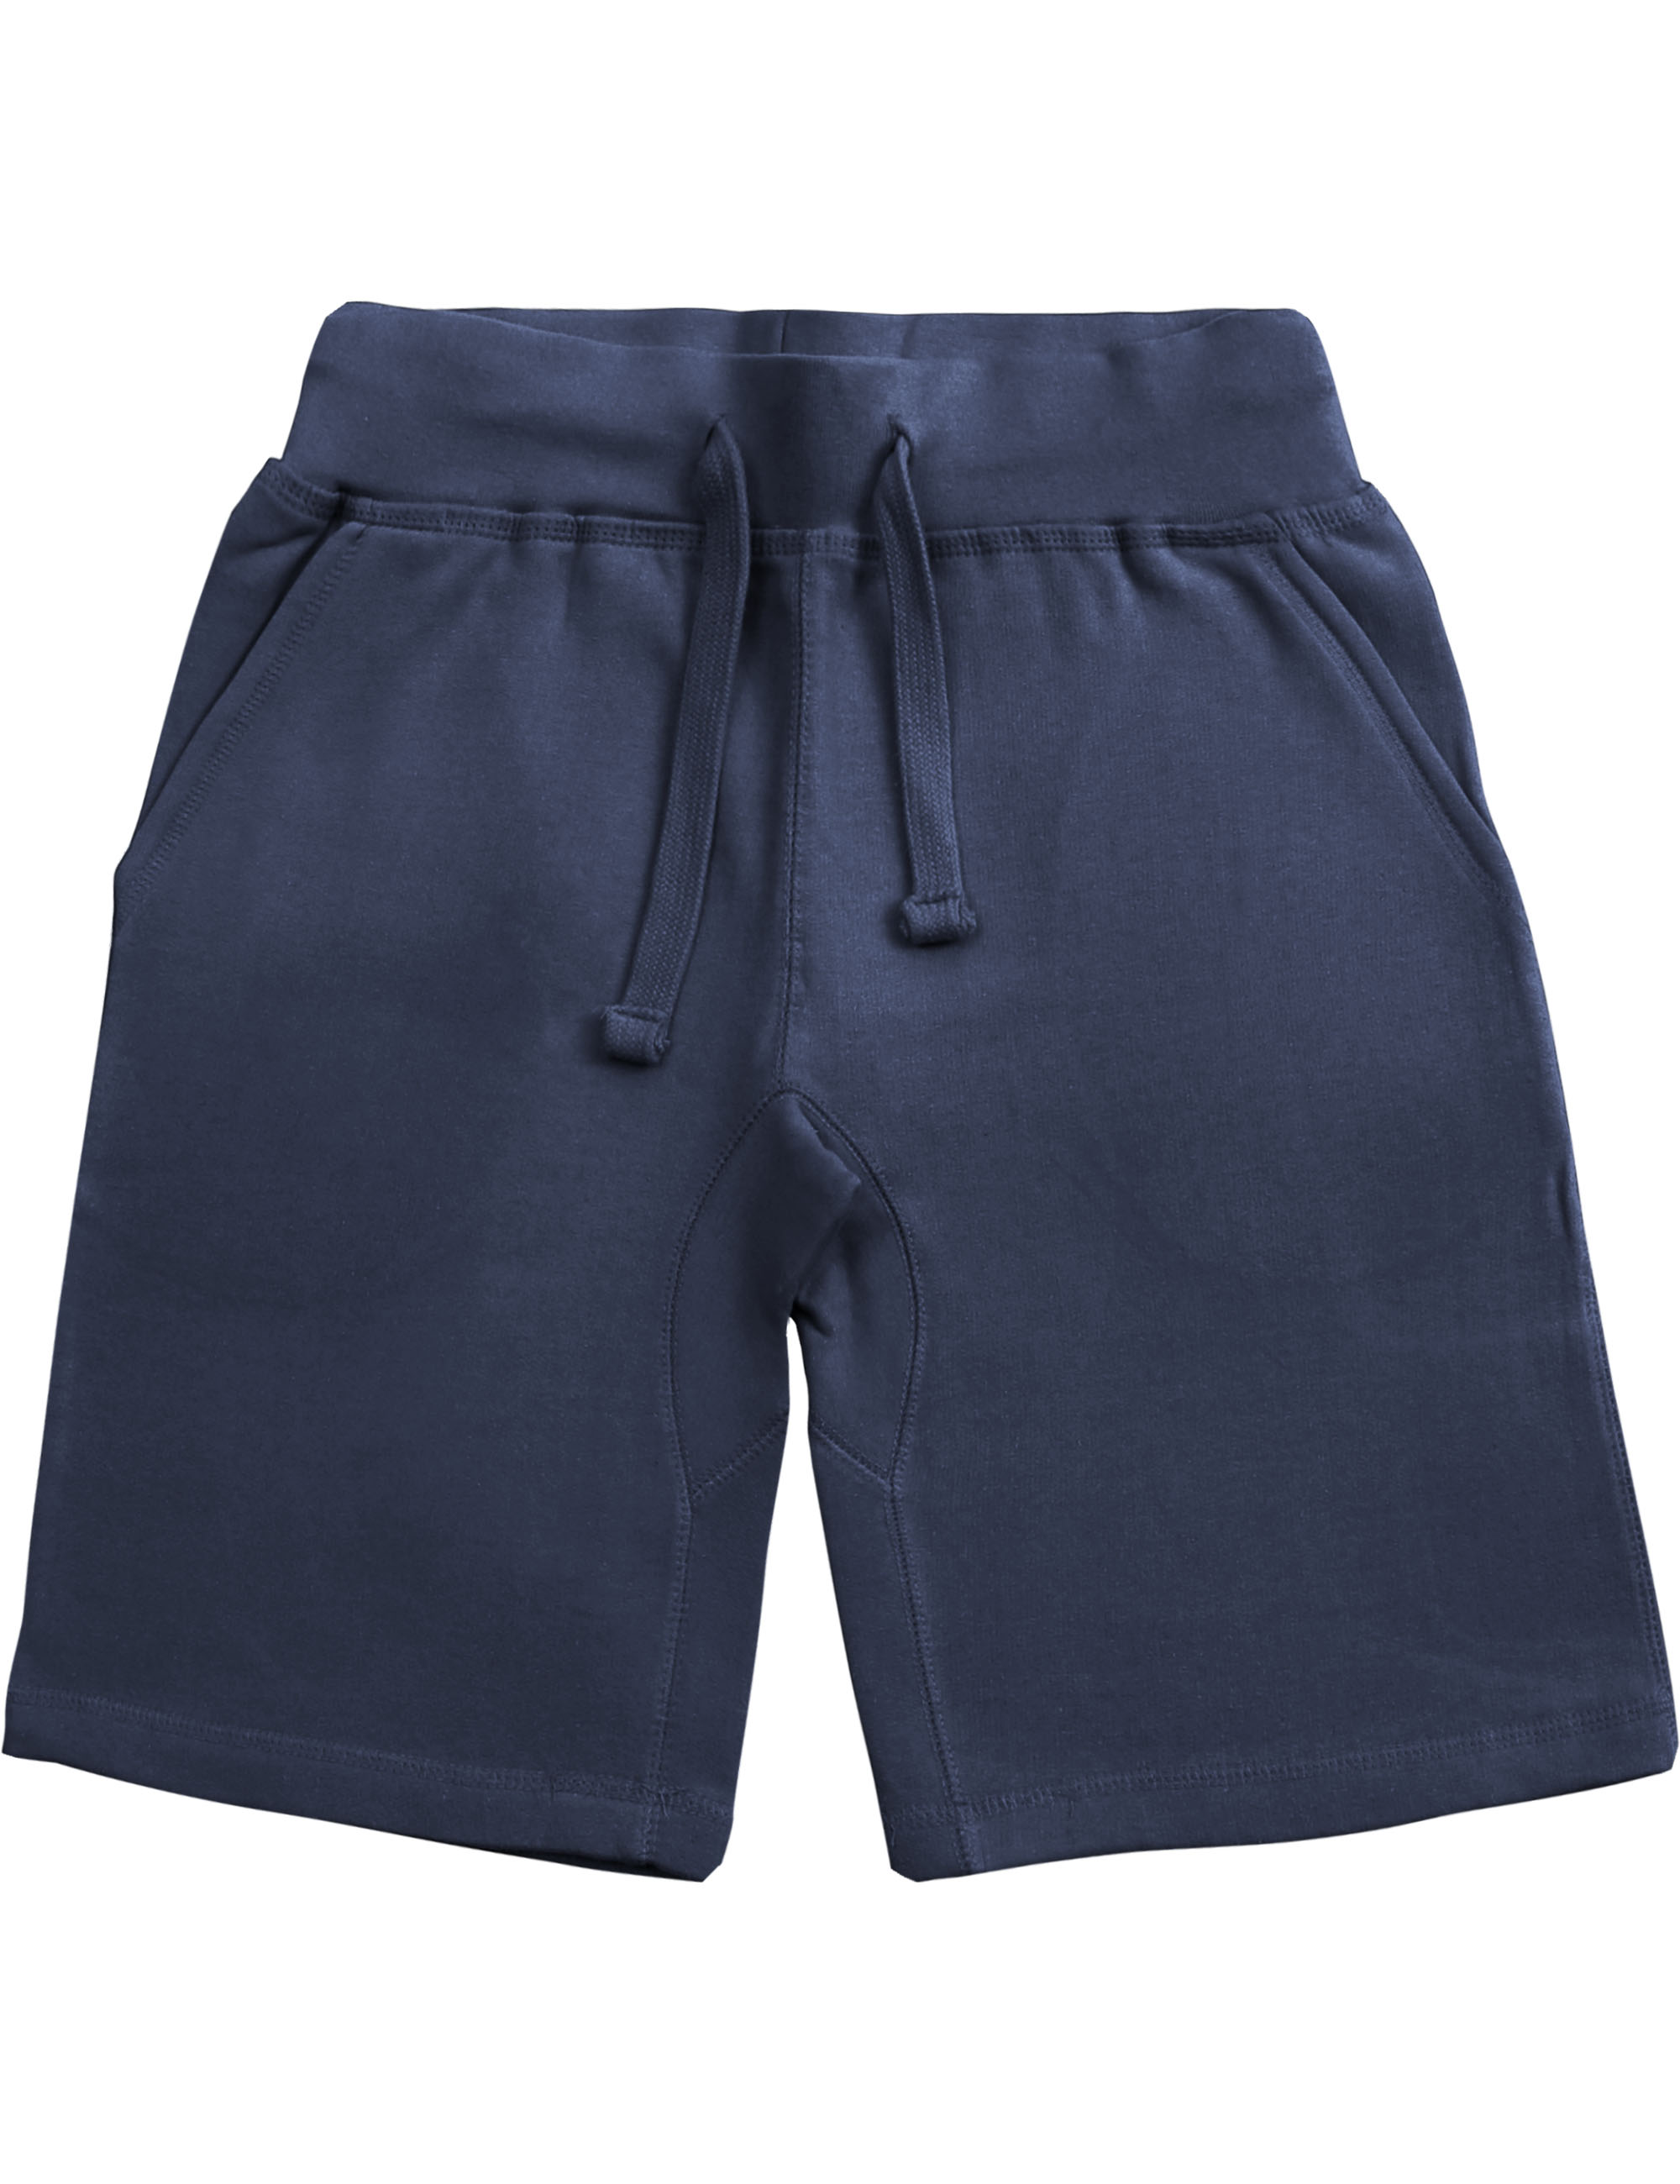 Ma Croix - Mens Sweat Shorts Casual Classic Fit Comfort Activewear ...